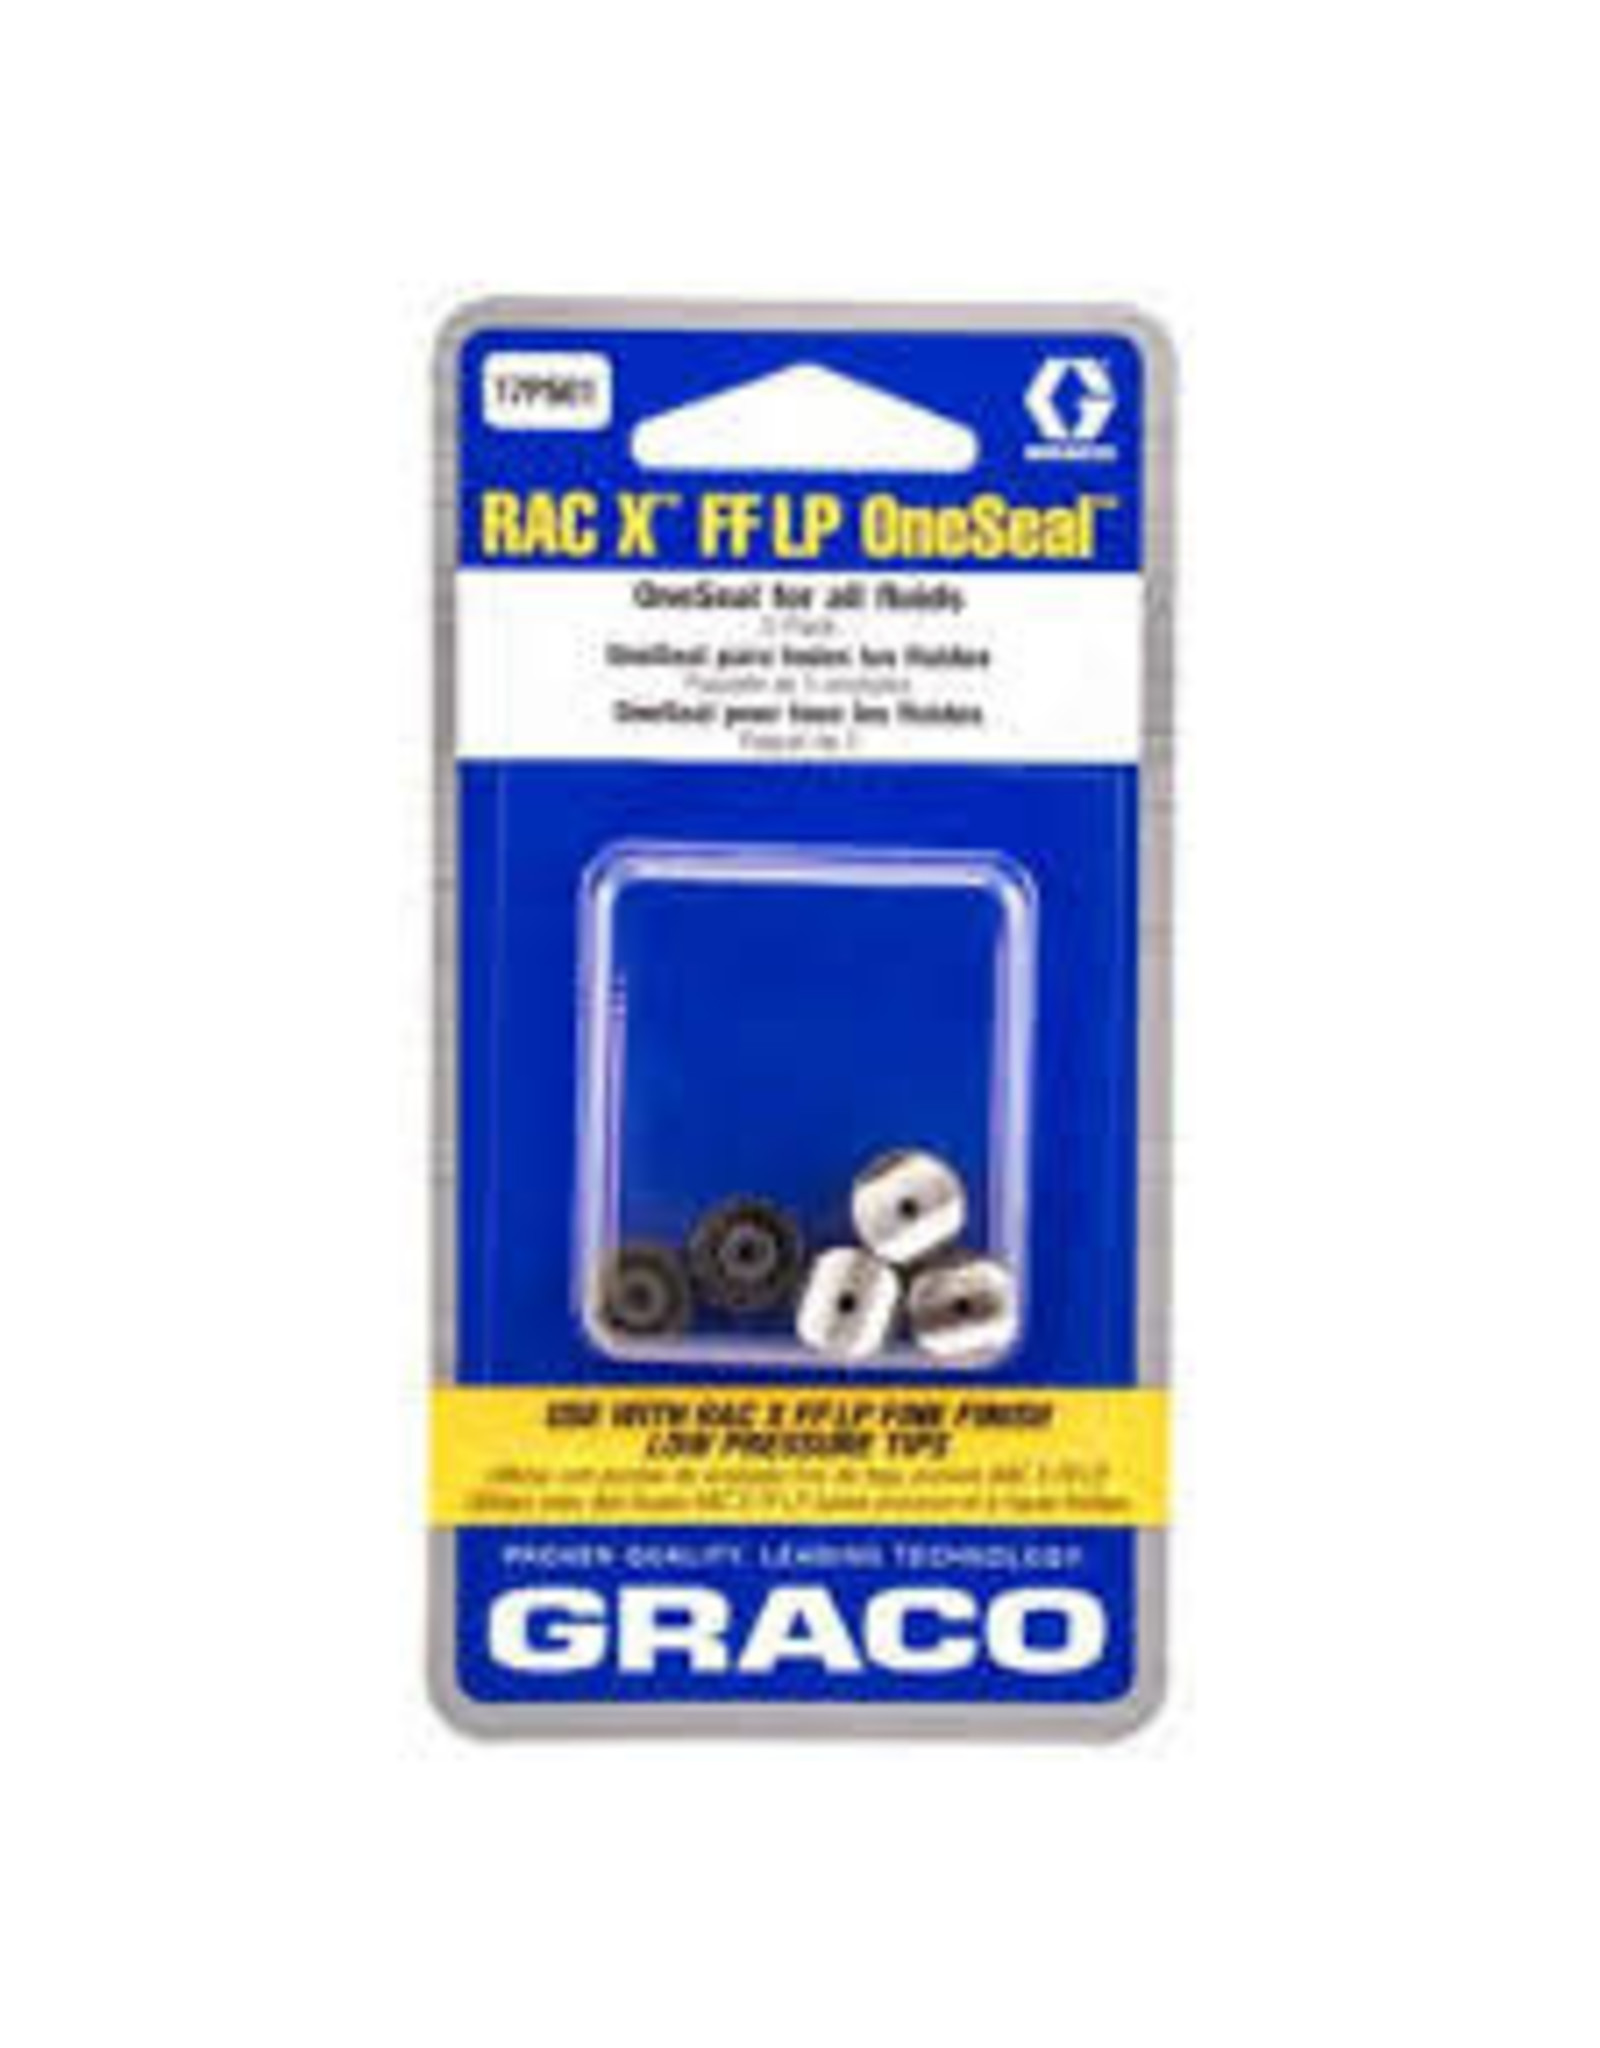 Graco 17P501 Graco Rac X FFLP One Seal, 5 Pk